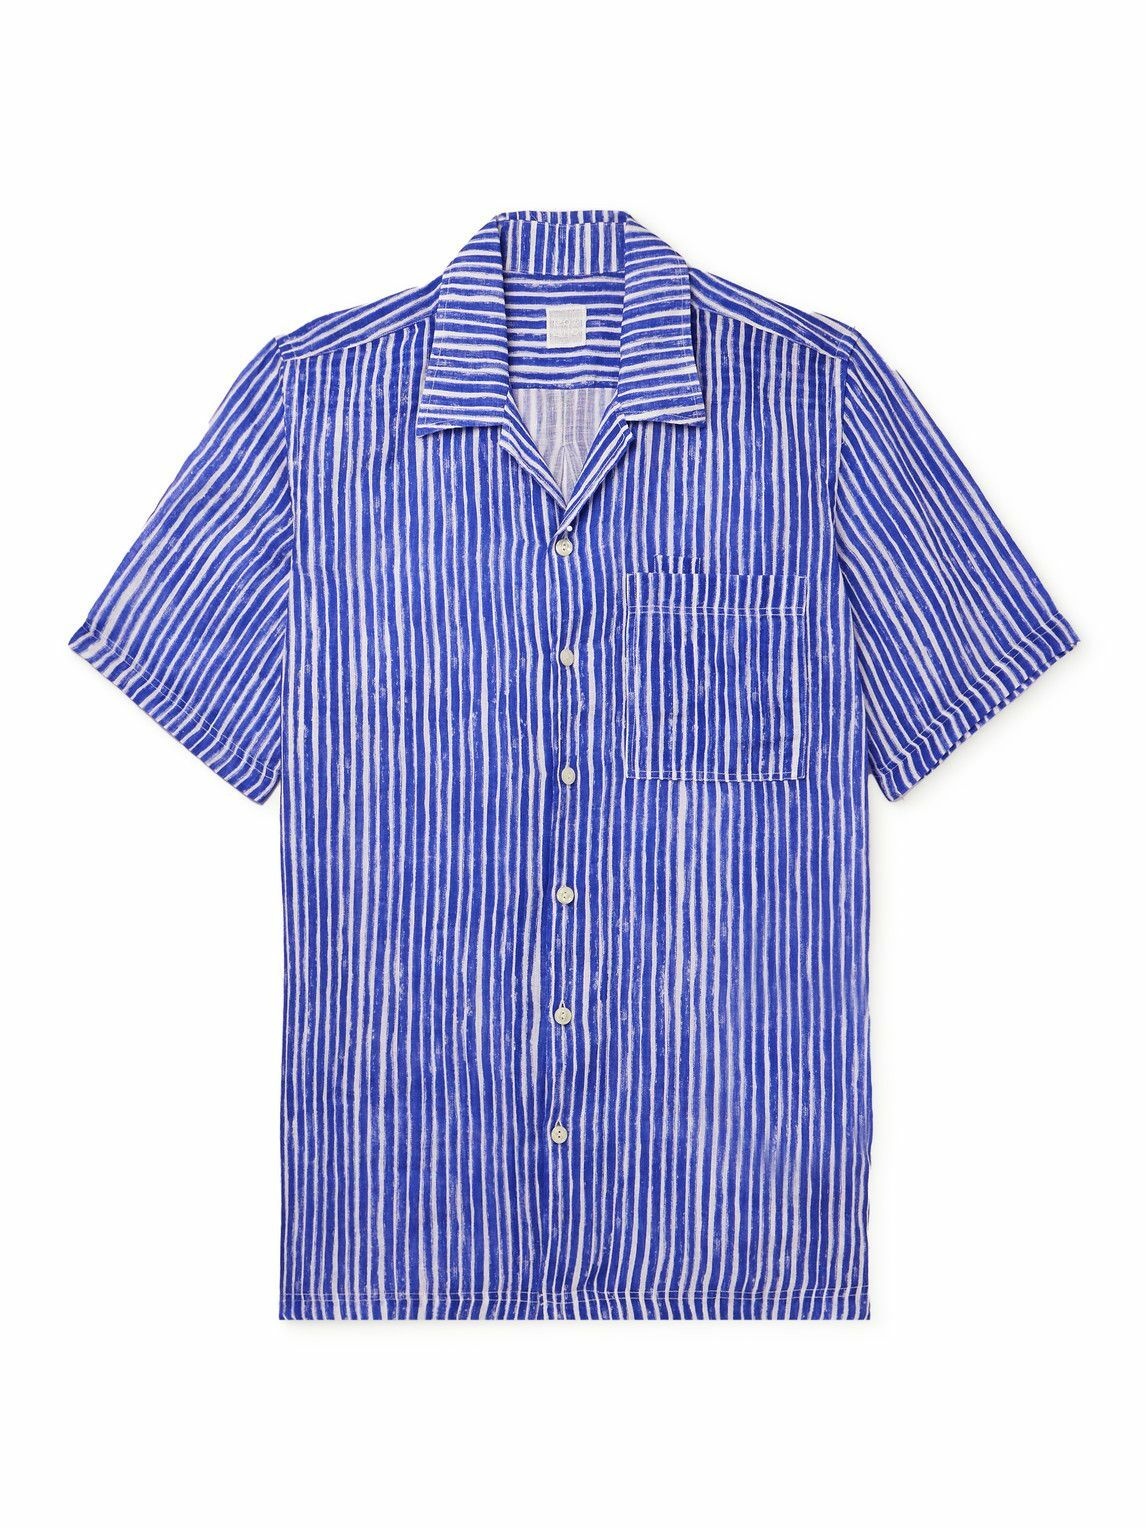 120% - Slim-Fit Striped Linen Shirt - Blue 120%